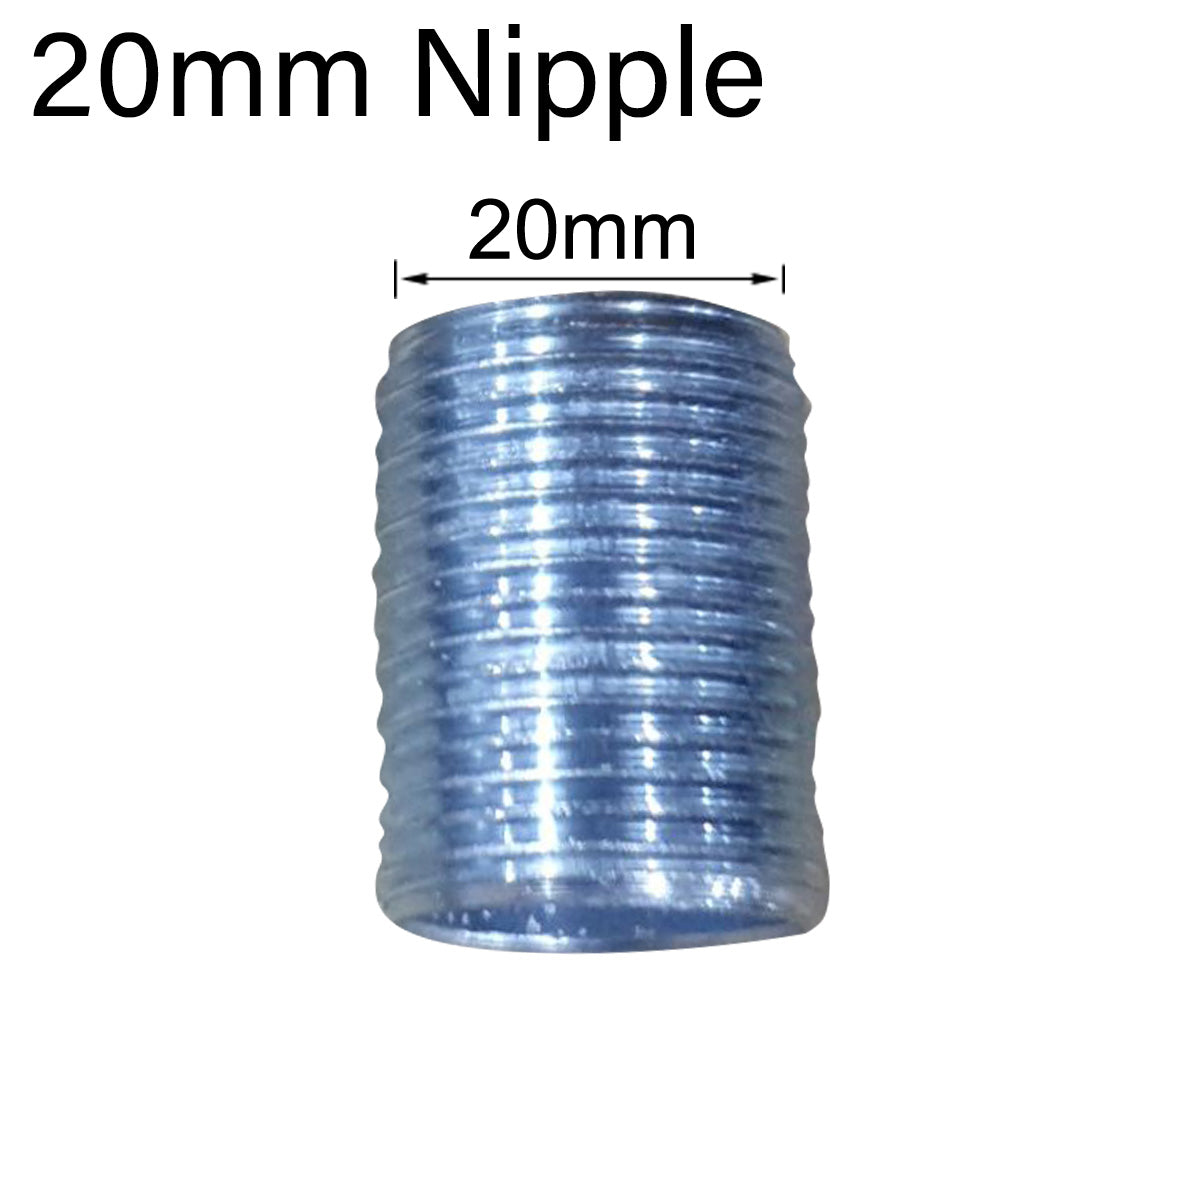 20mm Nipple Pipe Lighting~2385